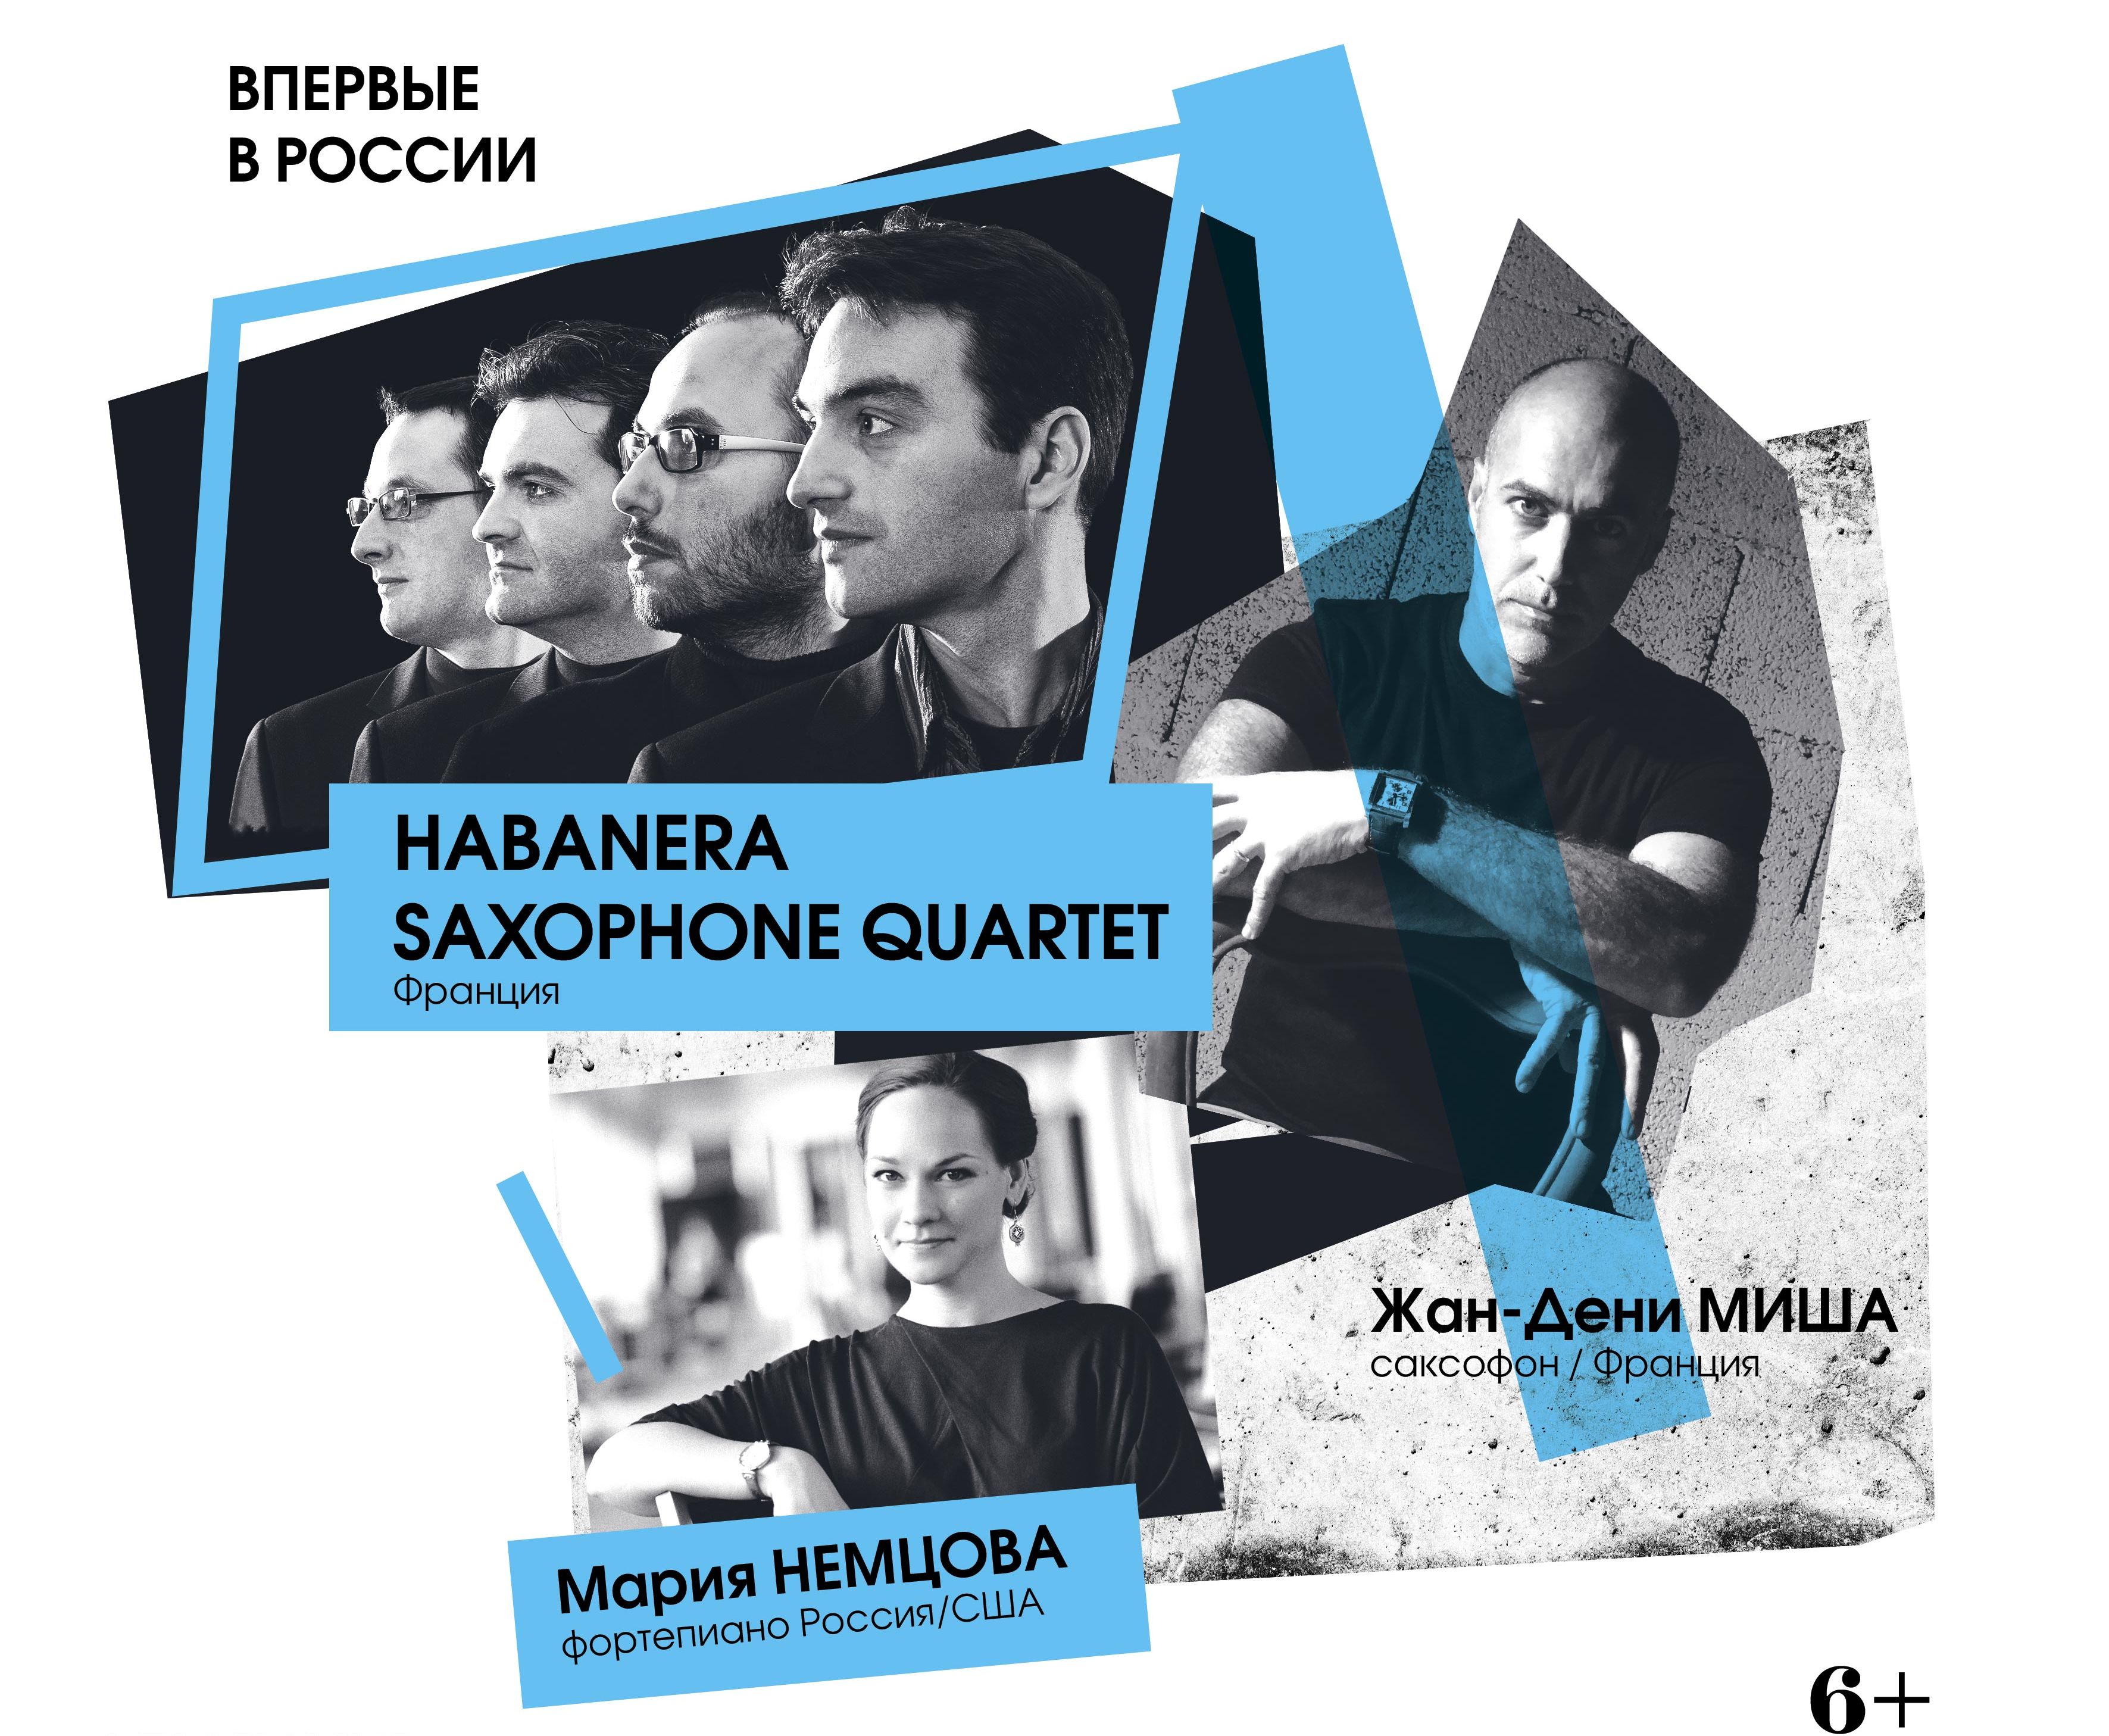 Concert of Habanera Saxophone Quartet in St. Petersburg